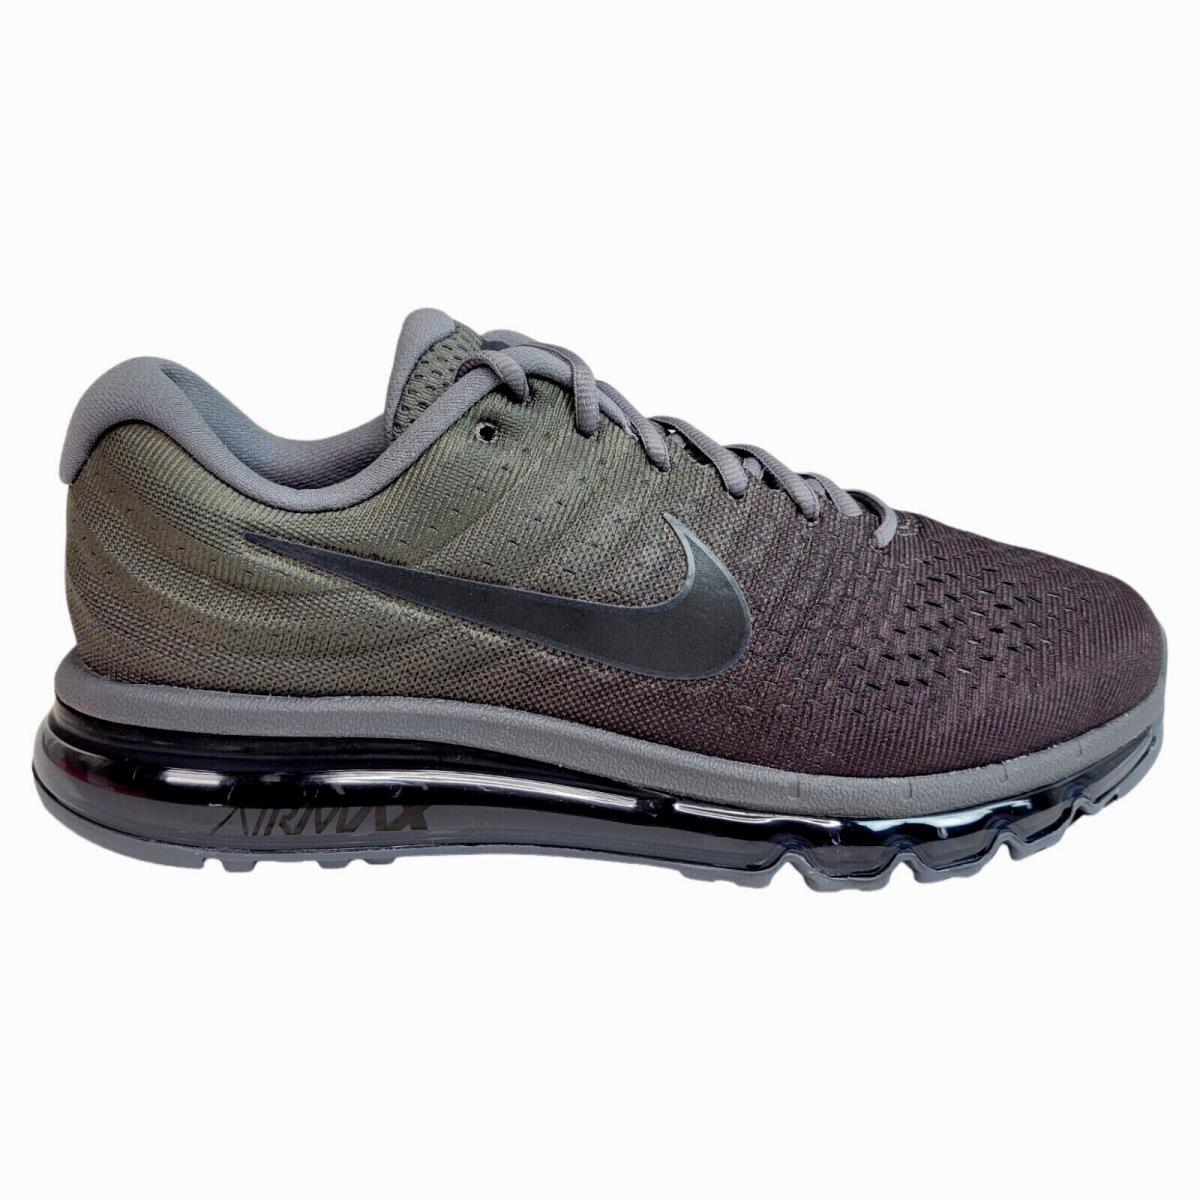 Nike Mens 10 10.5 11 Air Max 2017 Grey Anthracite Dark Running Shoes 849559-008